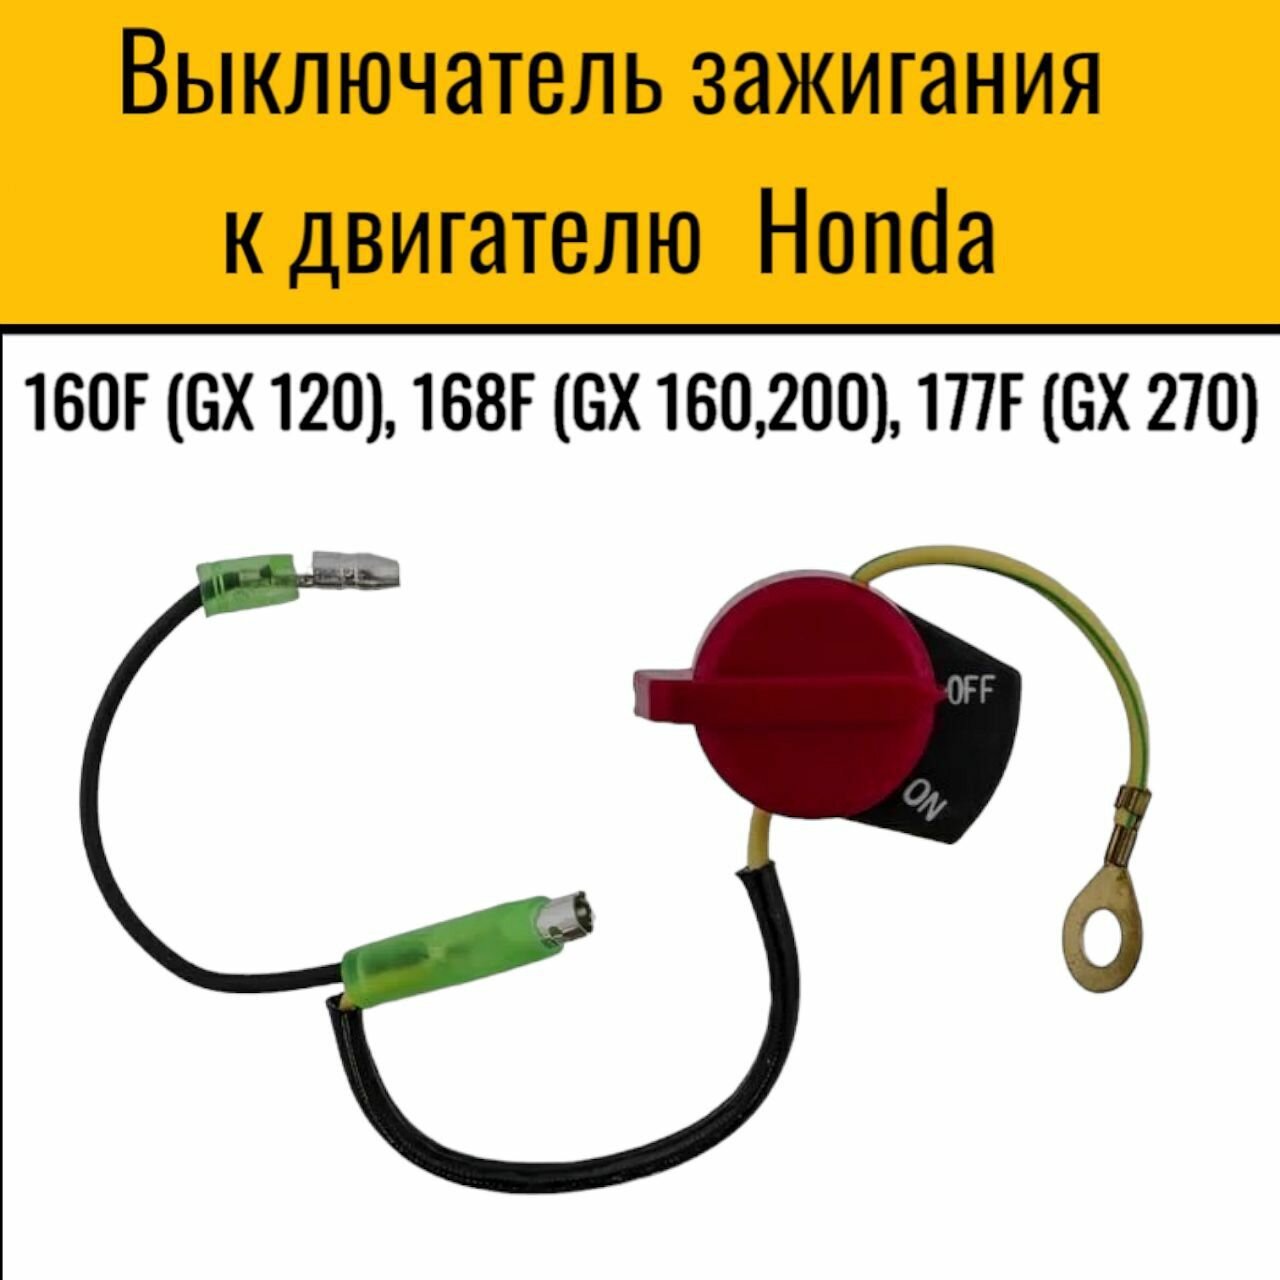 Выключатель зажигания к двигателю Honda 160F (GX 120), 168F (GX 160,200), 177F (GX 270)